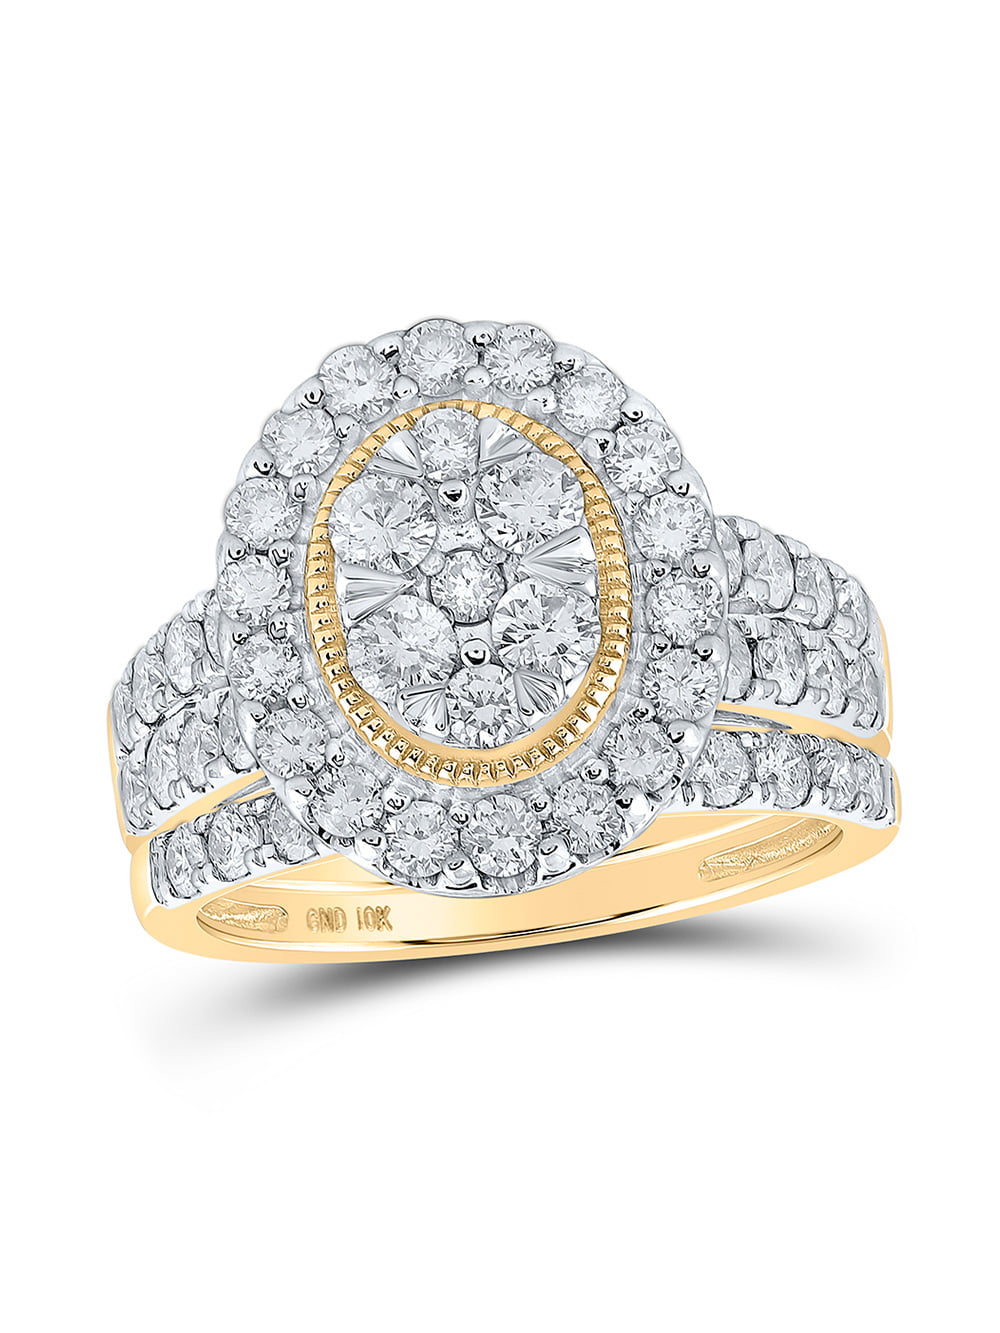 Details about   2CT Round-Cut Diamond Bridal Wedding Engagement Ring Set 10k Yellow Gold Finish 